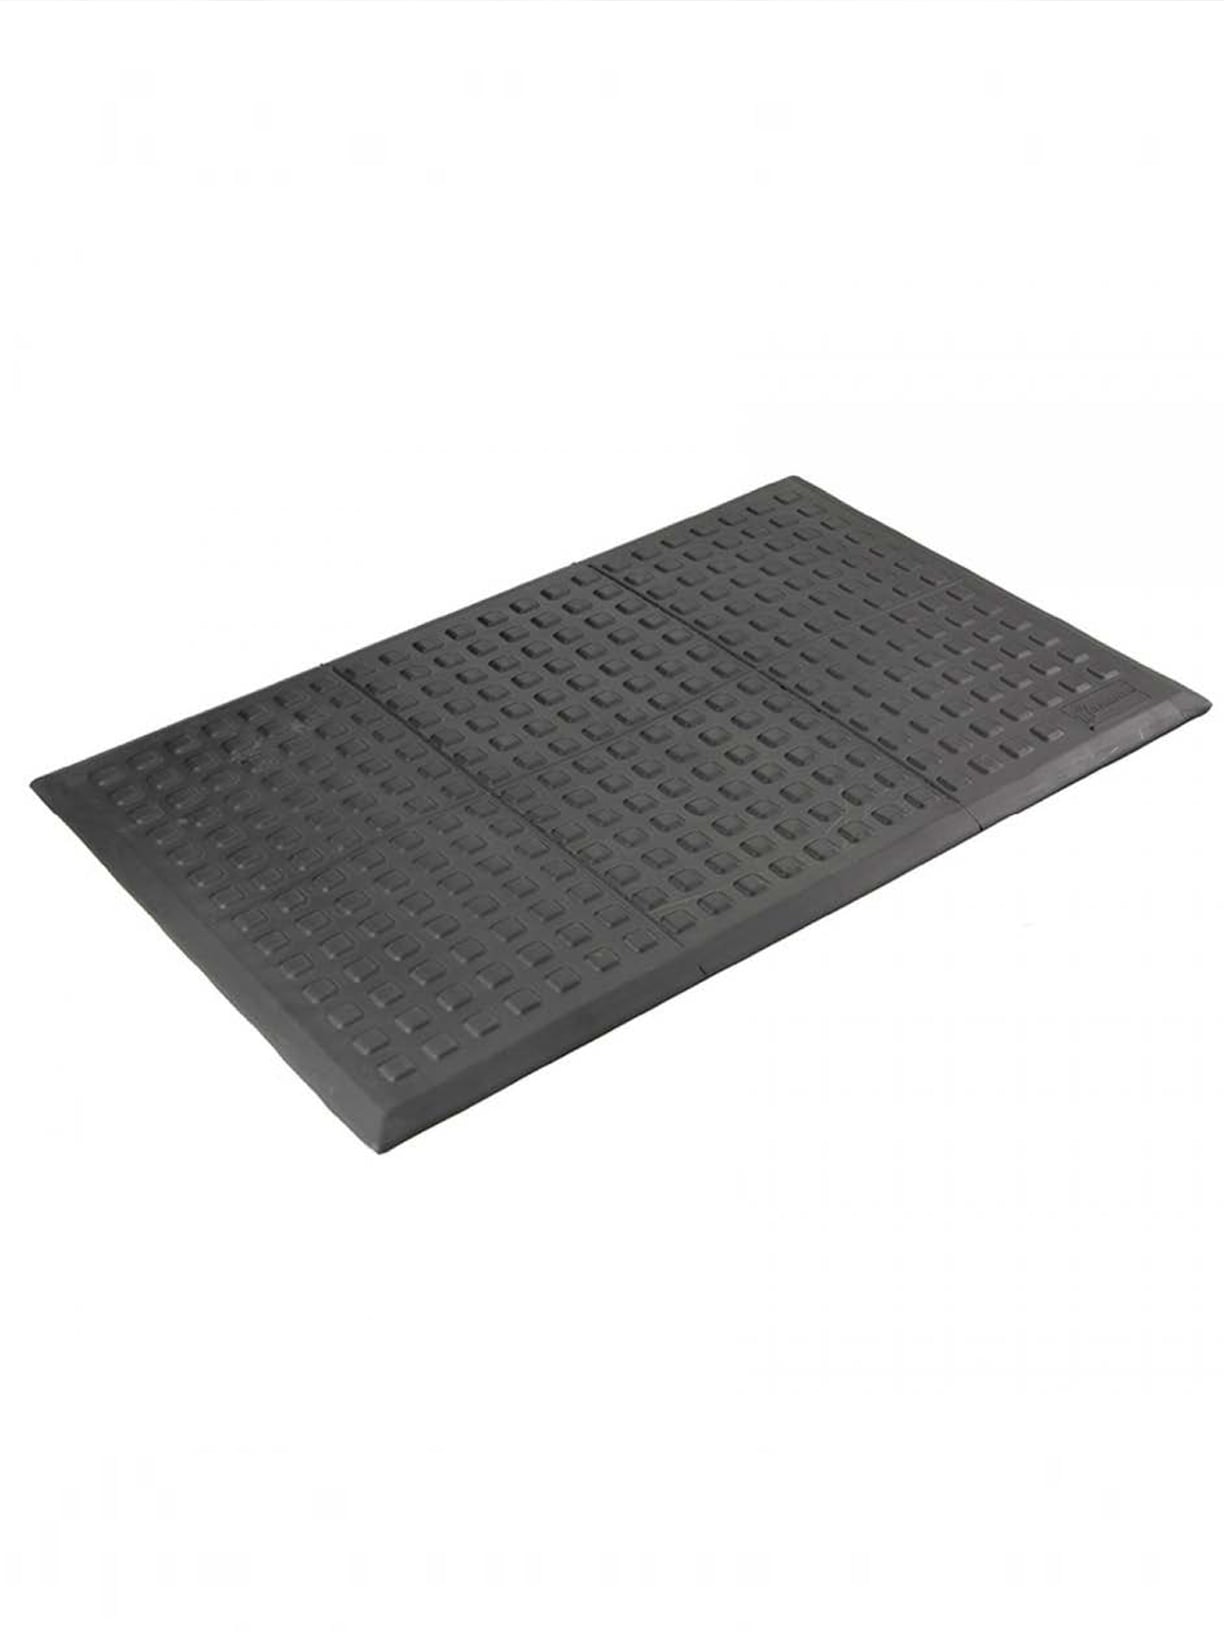 ErgoTech Products: Tehnoguma - Anti-Fatigue Floor mats 3